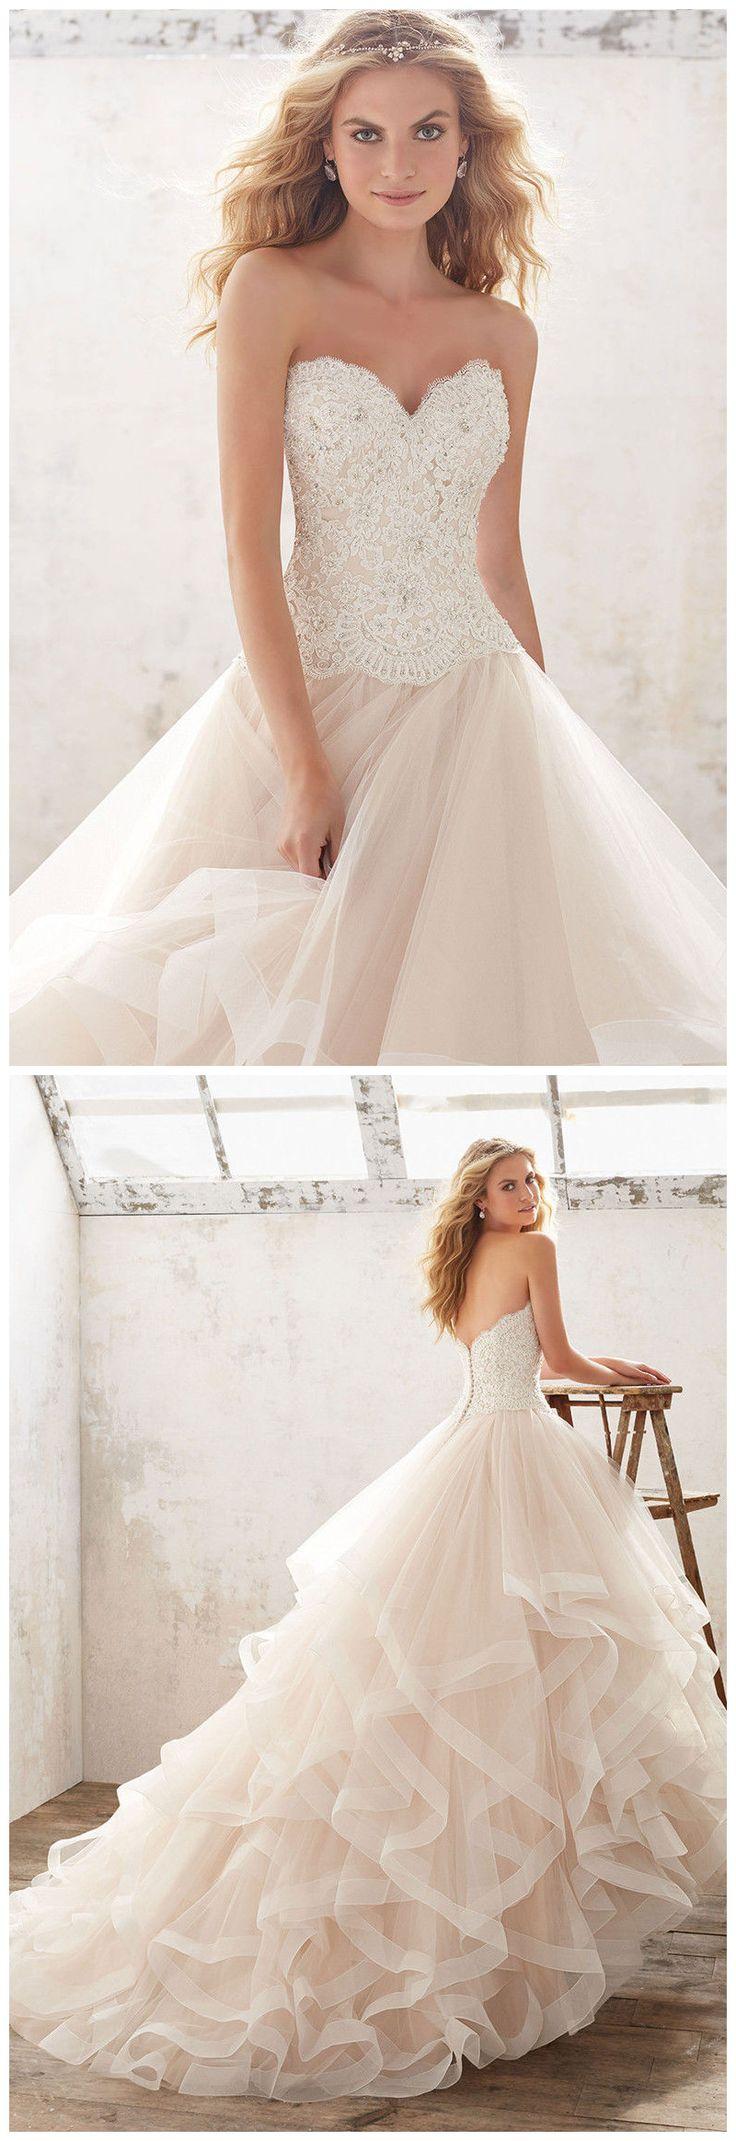 Wedding - New White Ivory Lace Bridal Gown Wedding Dress Size From Olesa Wedding Shop